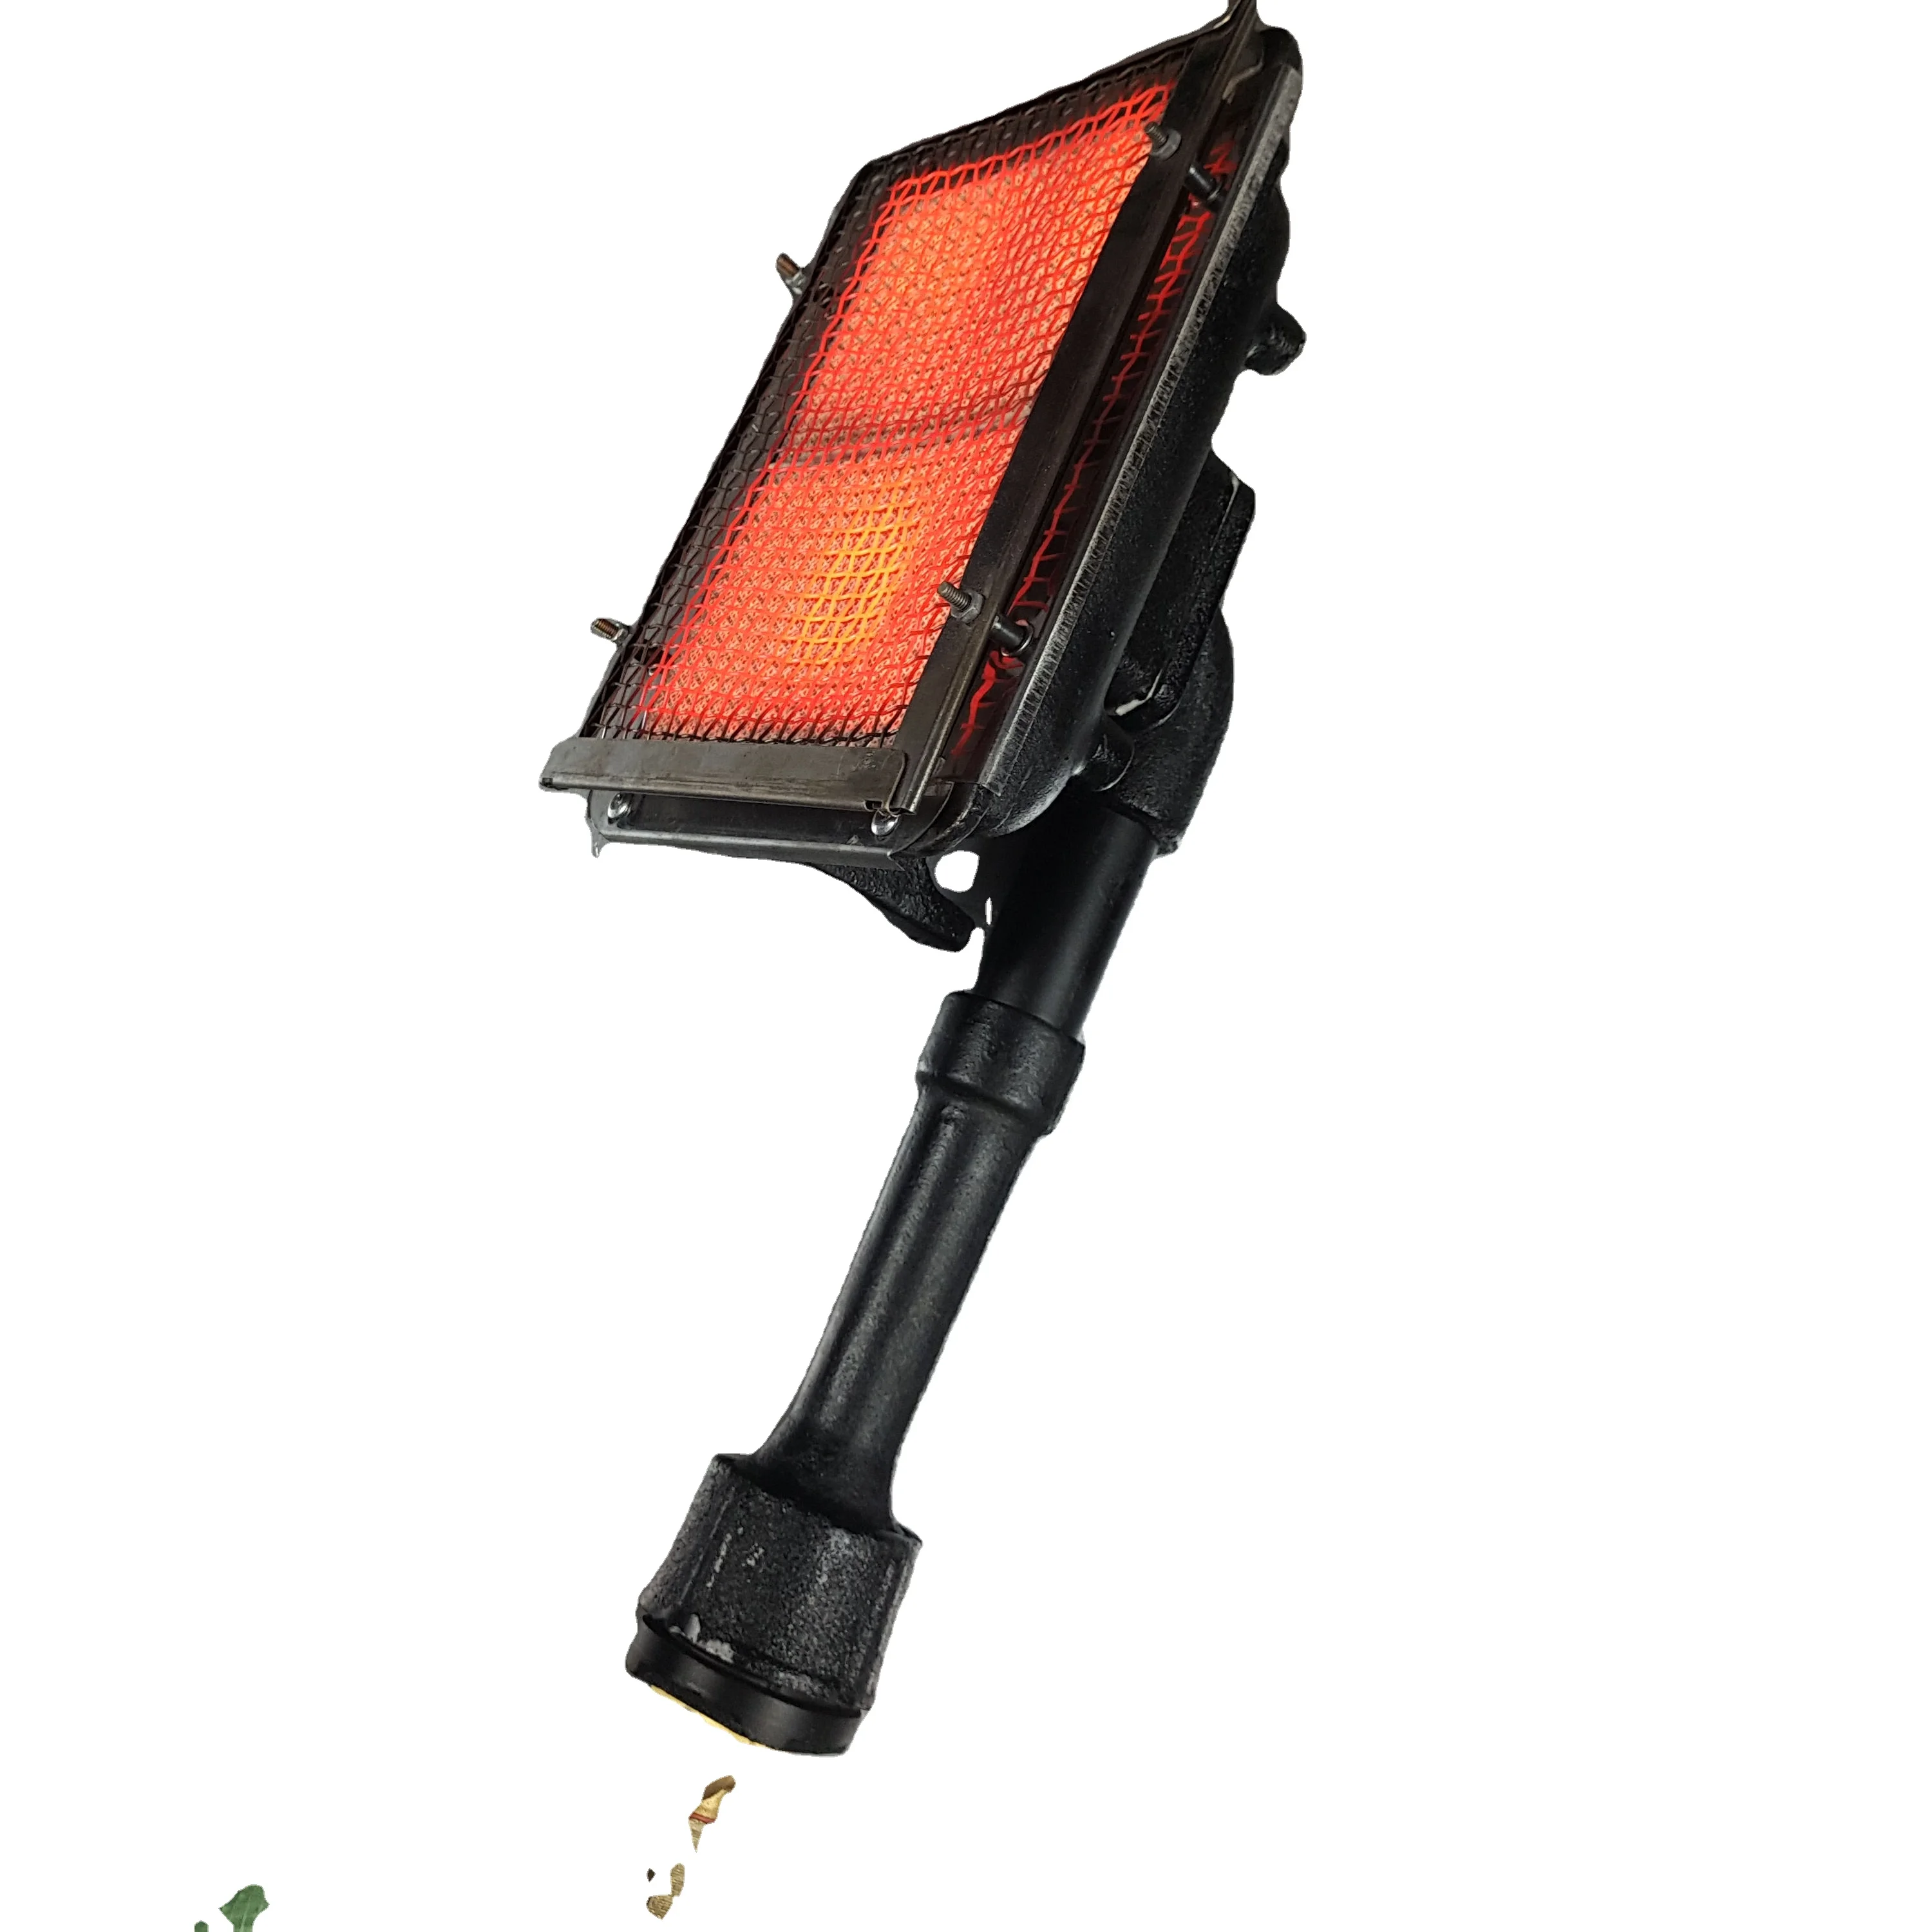 Infrared Burner Build-in Cooktop Ceramic Gas Stove HD82